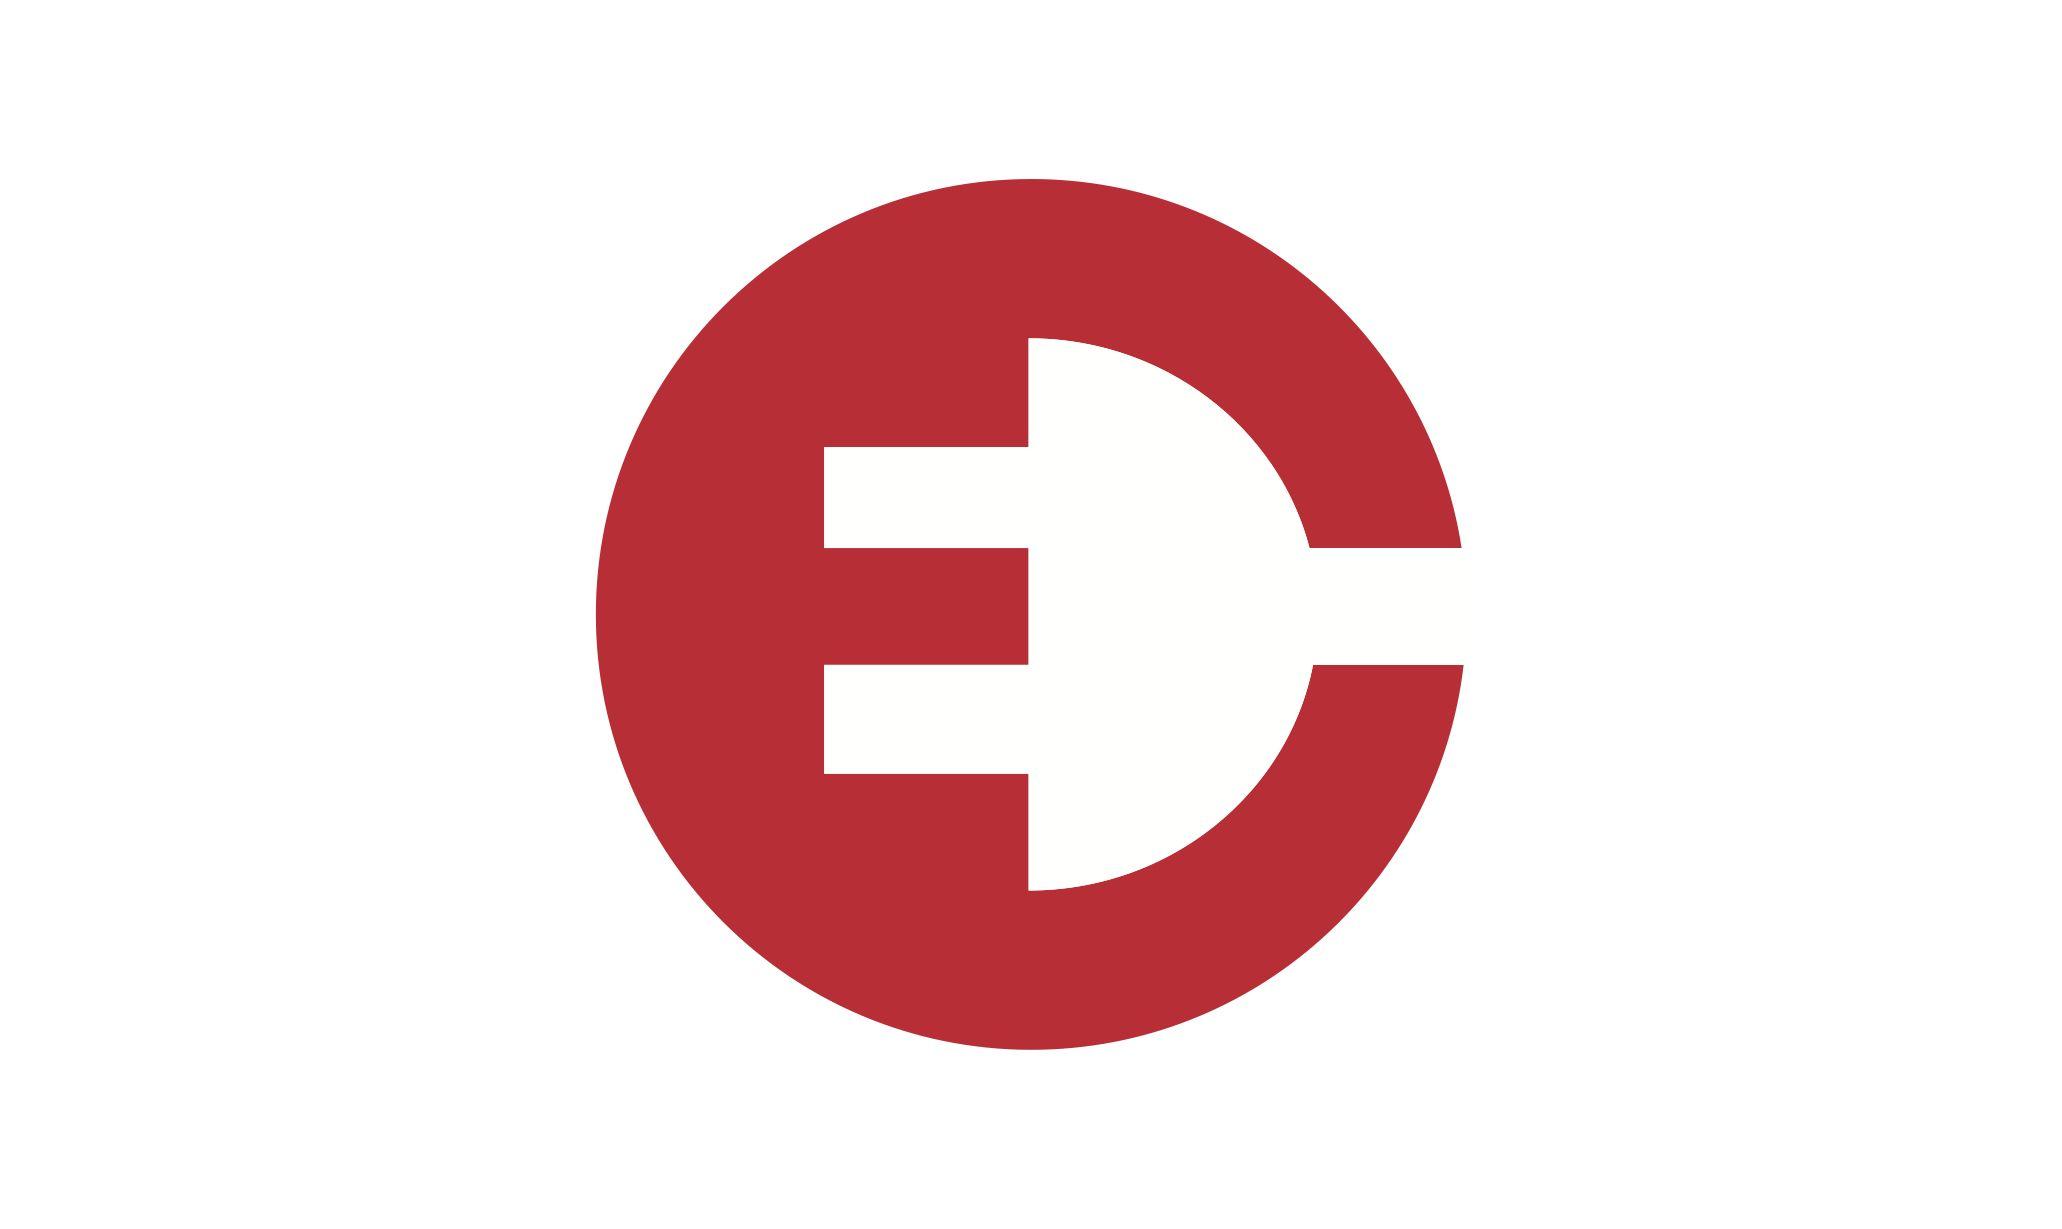 EDC Logo - File:EDC logo.jpg - Wikimedia Commons